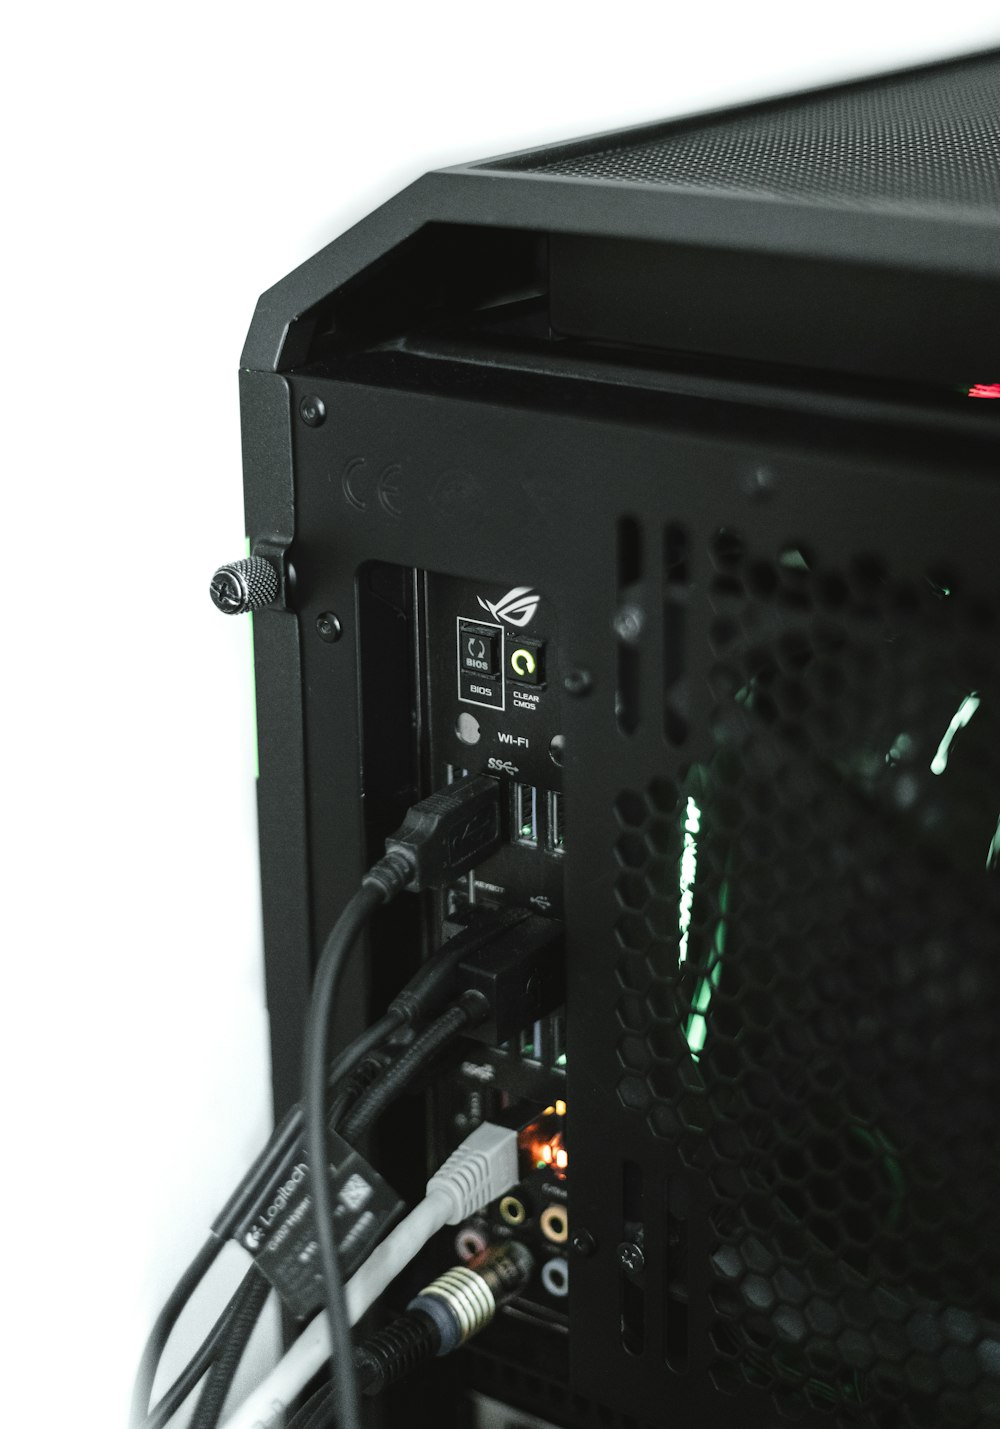 a close up of a black computer case